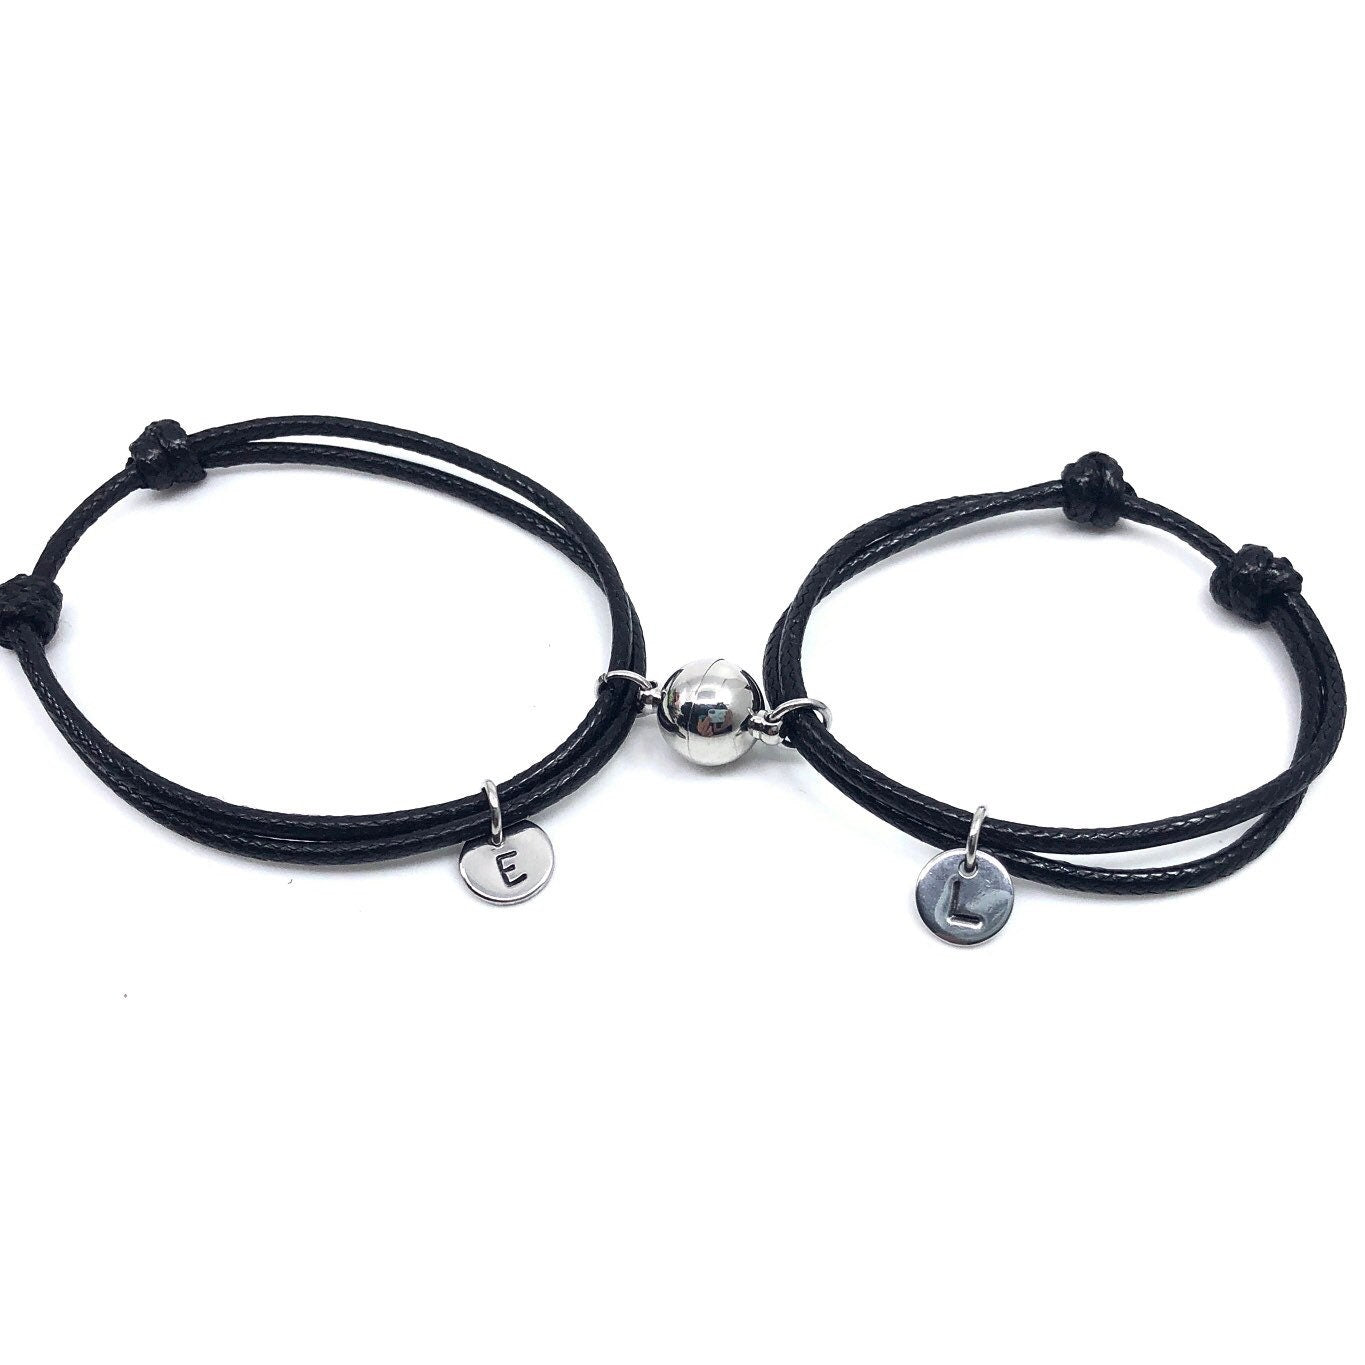 Couple Magnetic Bracelets, Black, Initial Bracelets, Simple Bracelets, includes 2 bracelets